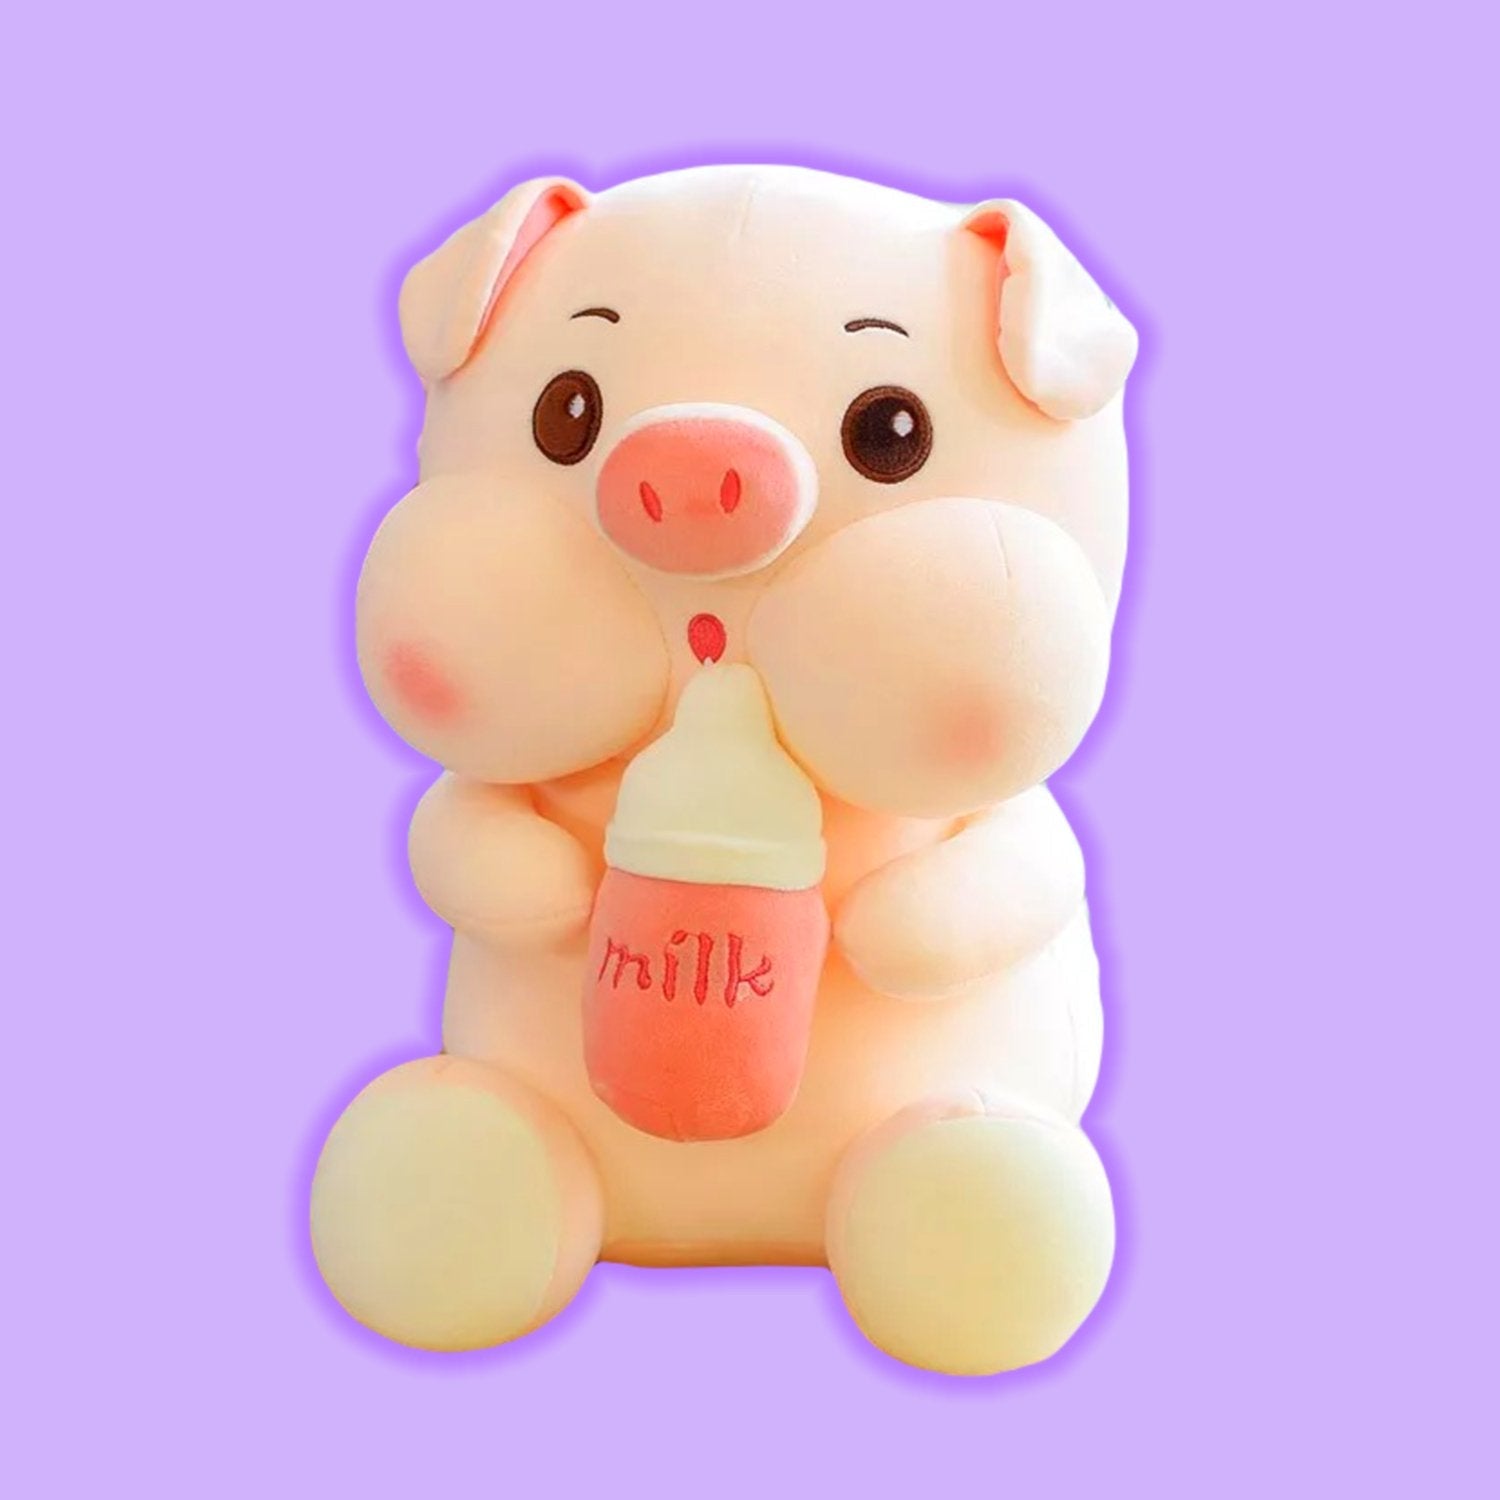 Cuddly Stuffed Pig Animal